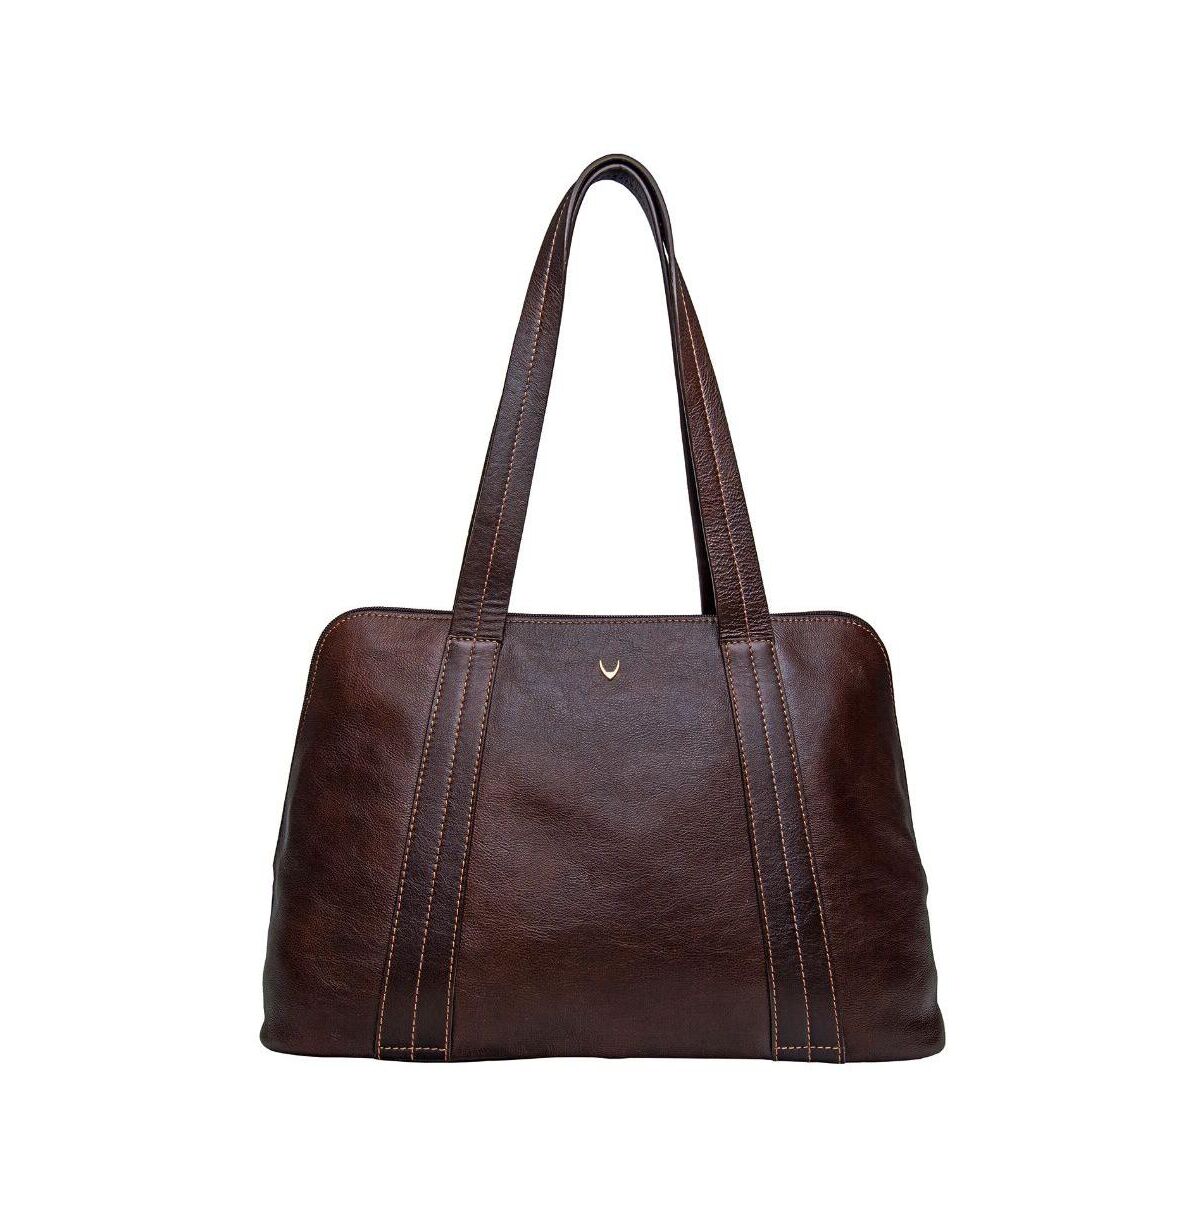 Hidesign Hide sign Cerys Large Leather Multi-Compartment Women's Tote Bag, Stylish Shoulder Handbag & Women's Work Bag - size (15.16